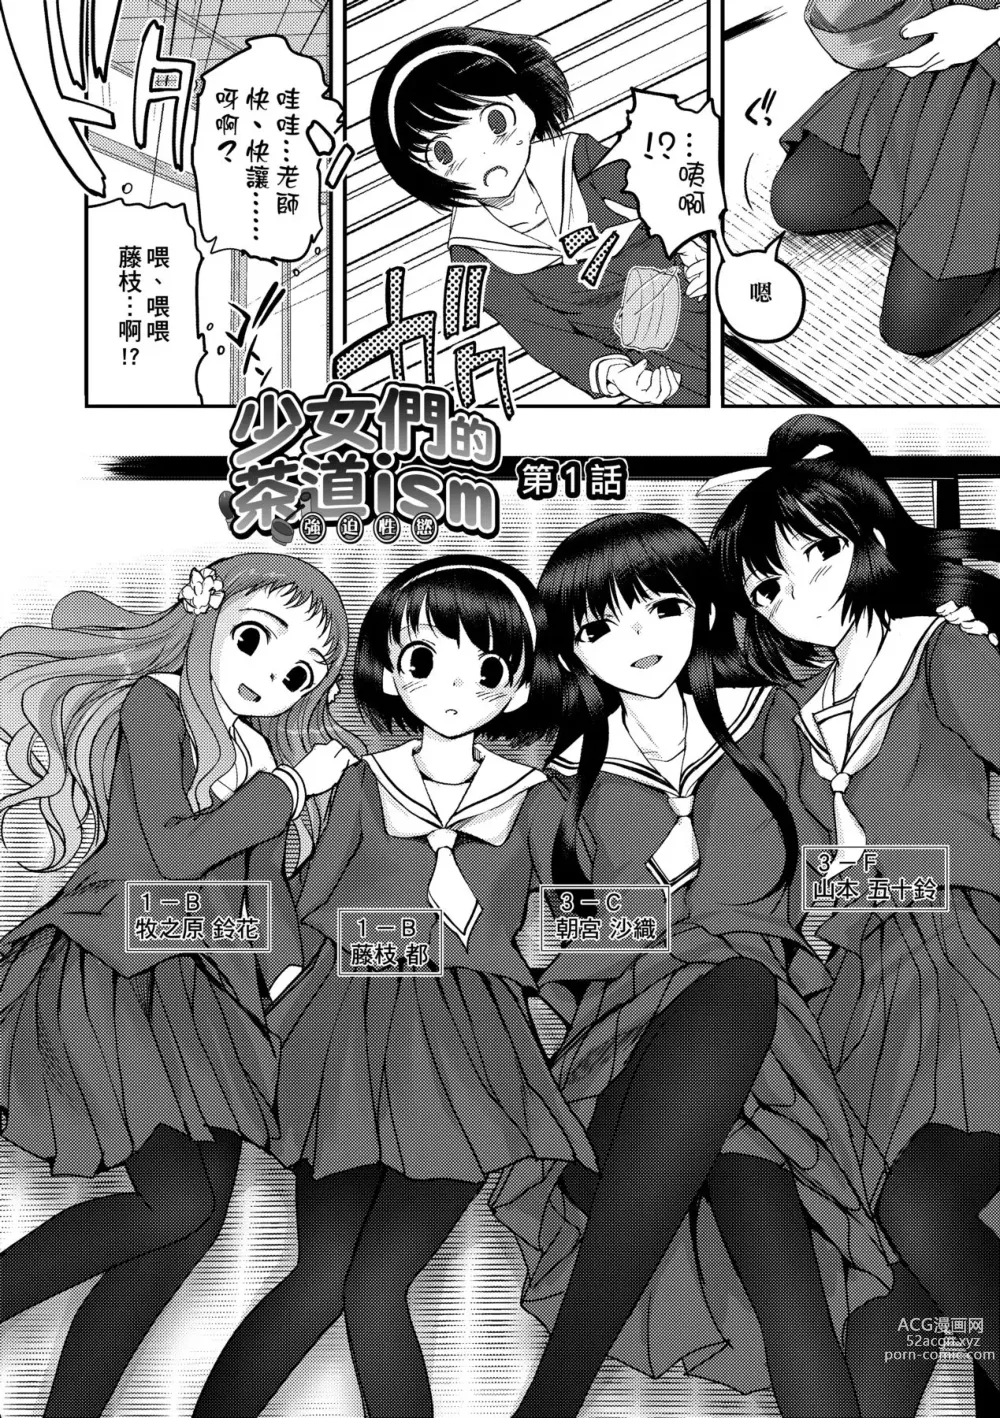 Page 10 of manga Shoujo-tachi no Sadism